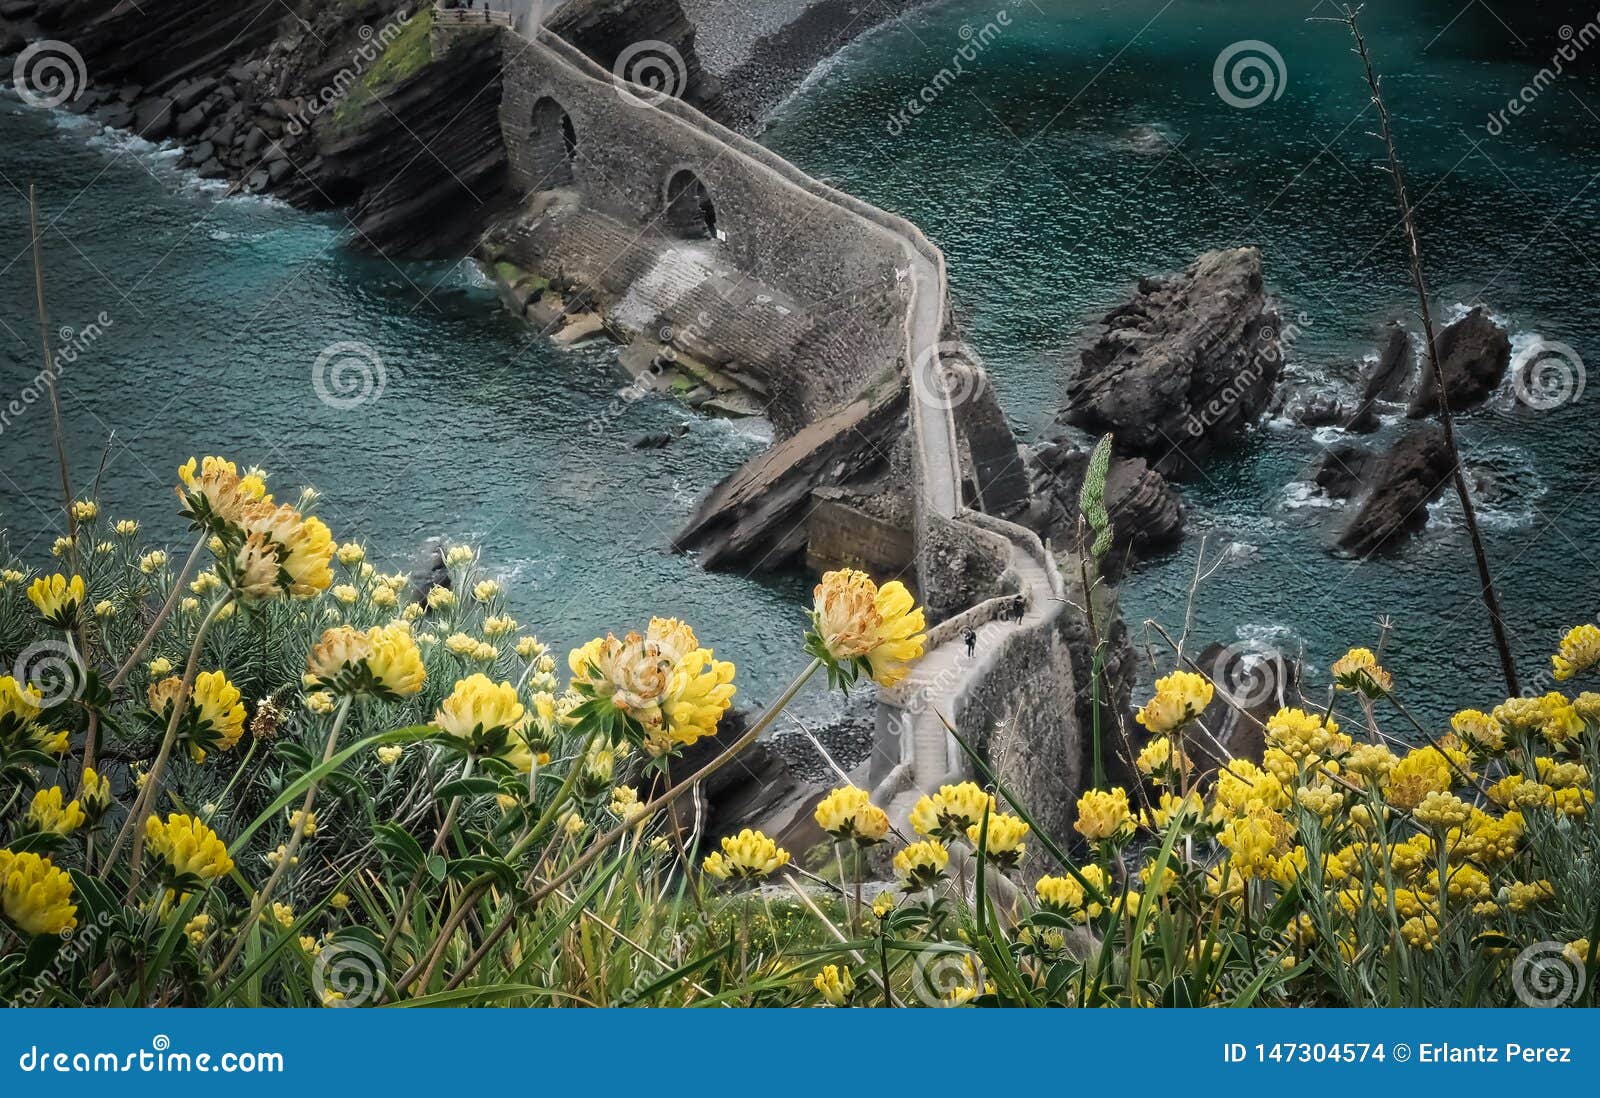 the coast from san juan de gaztelugatxe, dragon-stone in game of thrones, bridge and stone stairs